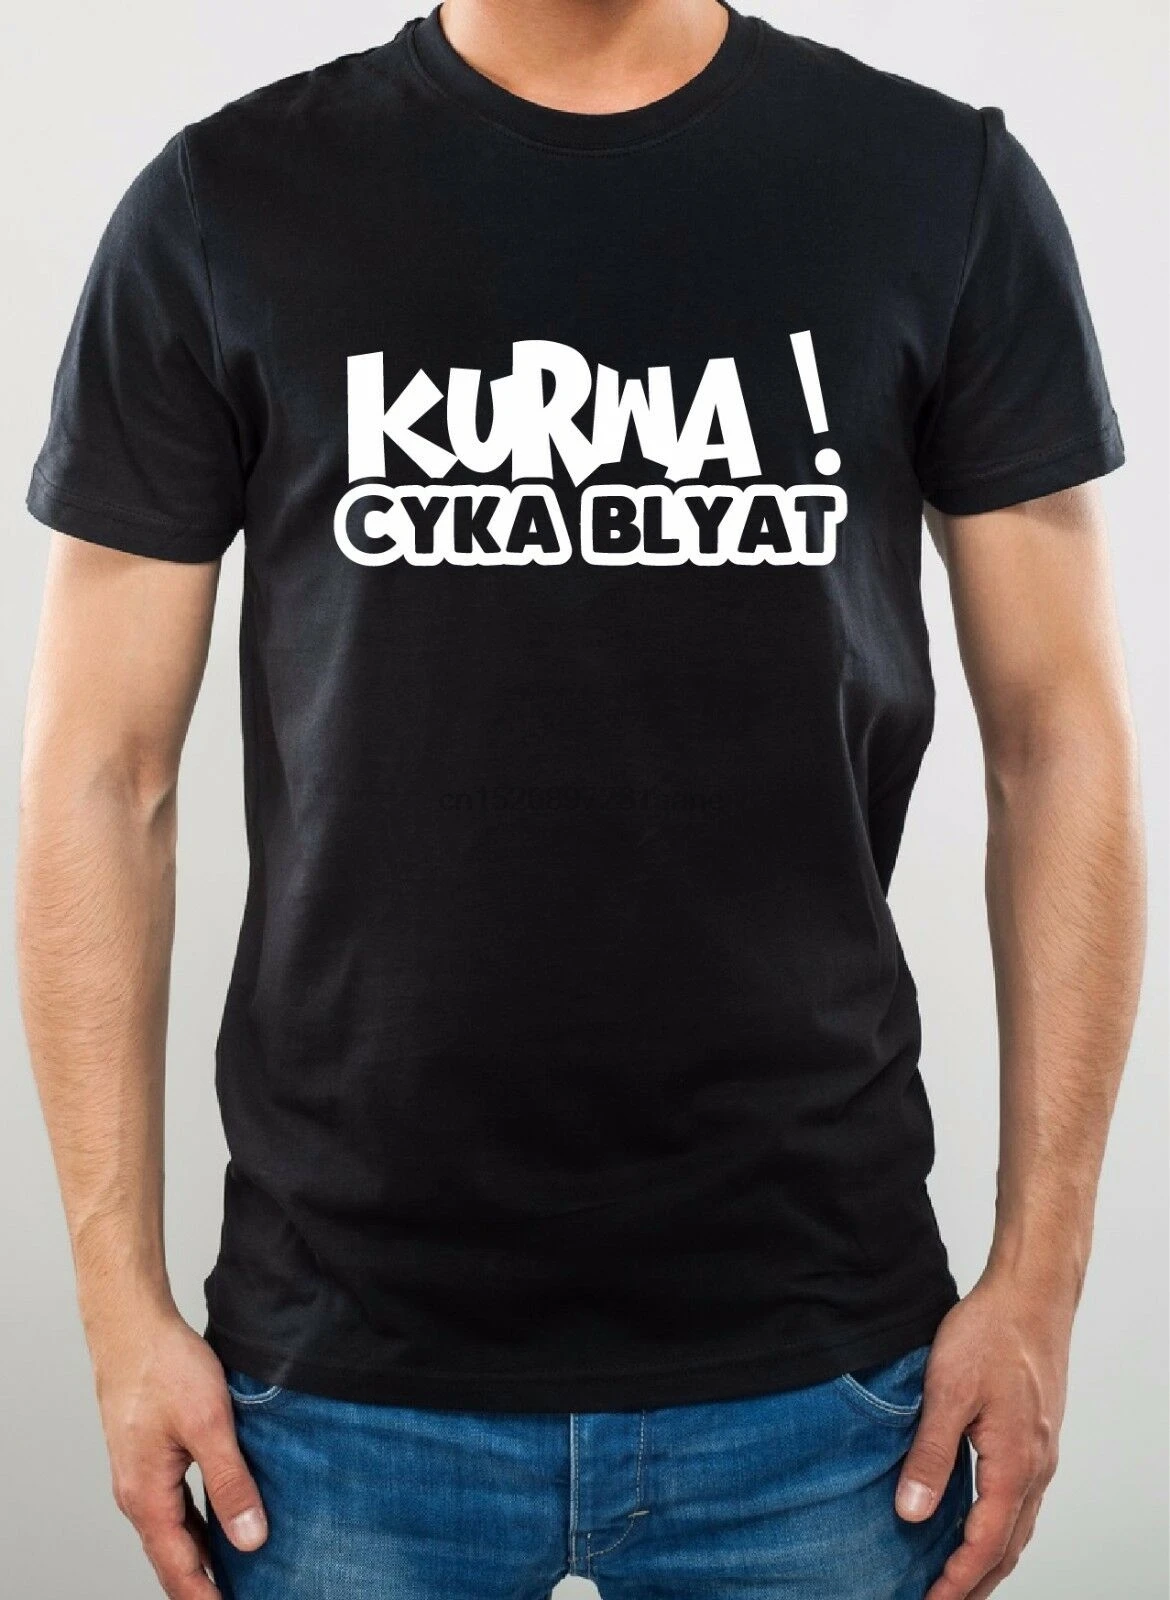 

T-shirt Kurwa cyka blyat - CSGO counter strike go - tee shirt Geek Print T Shirt Men Summer Style Fashion top tee